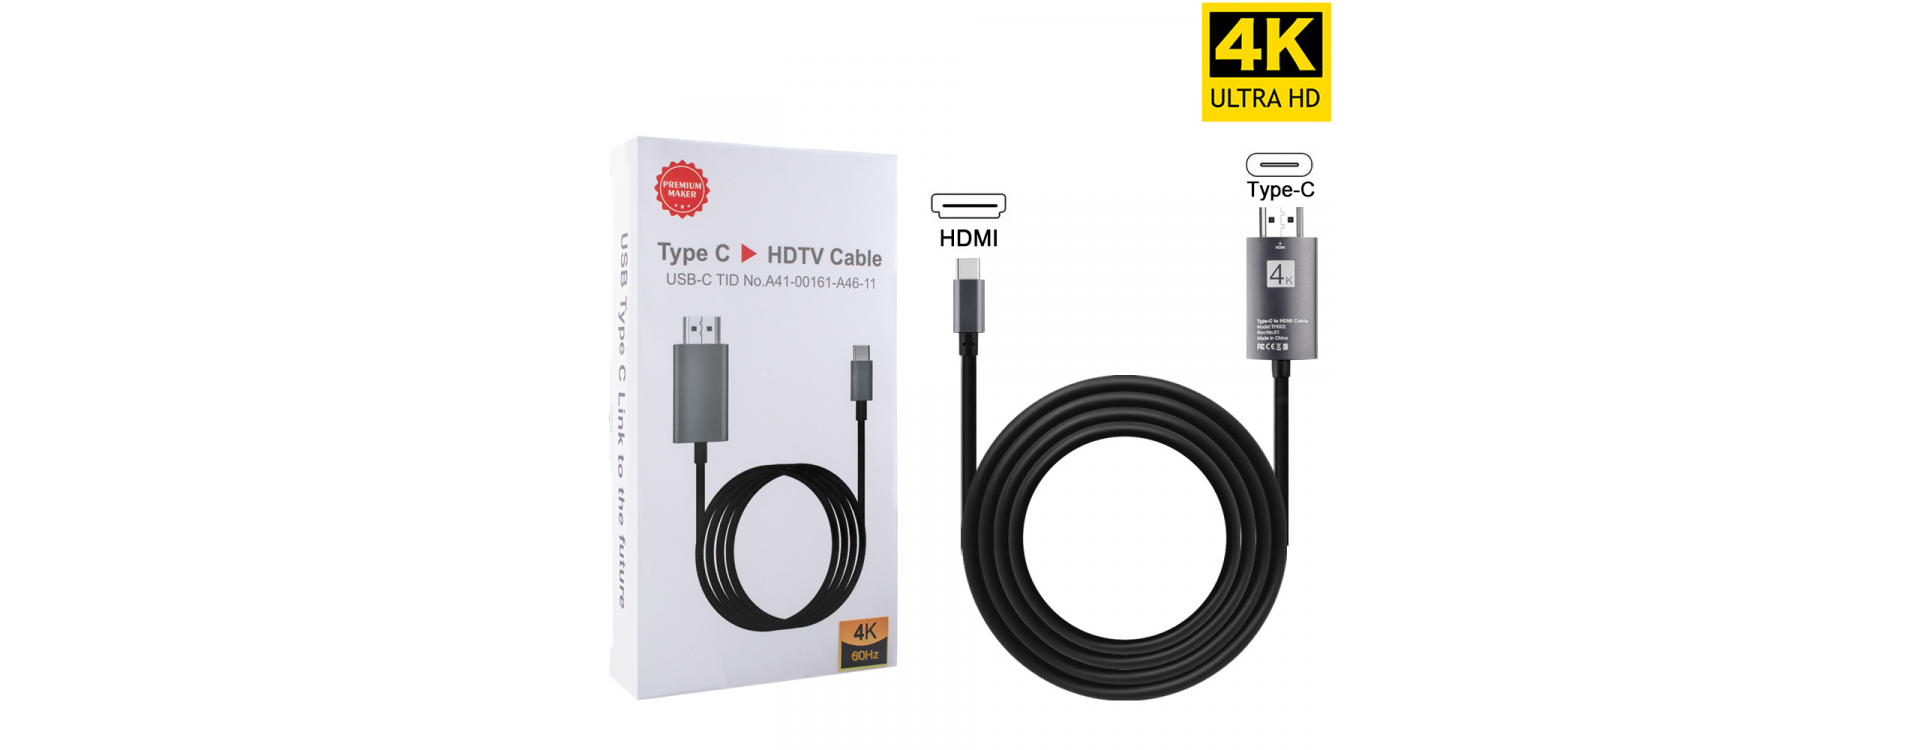 Cable Hdmi A Mini Hdmi para Laptop Tv Tablet